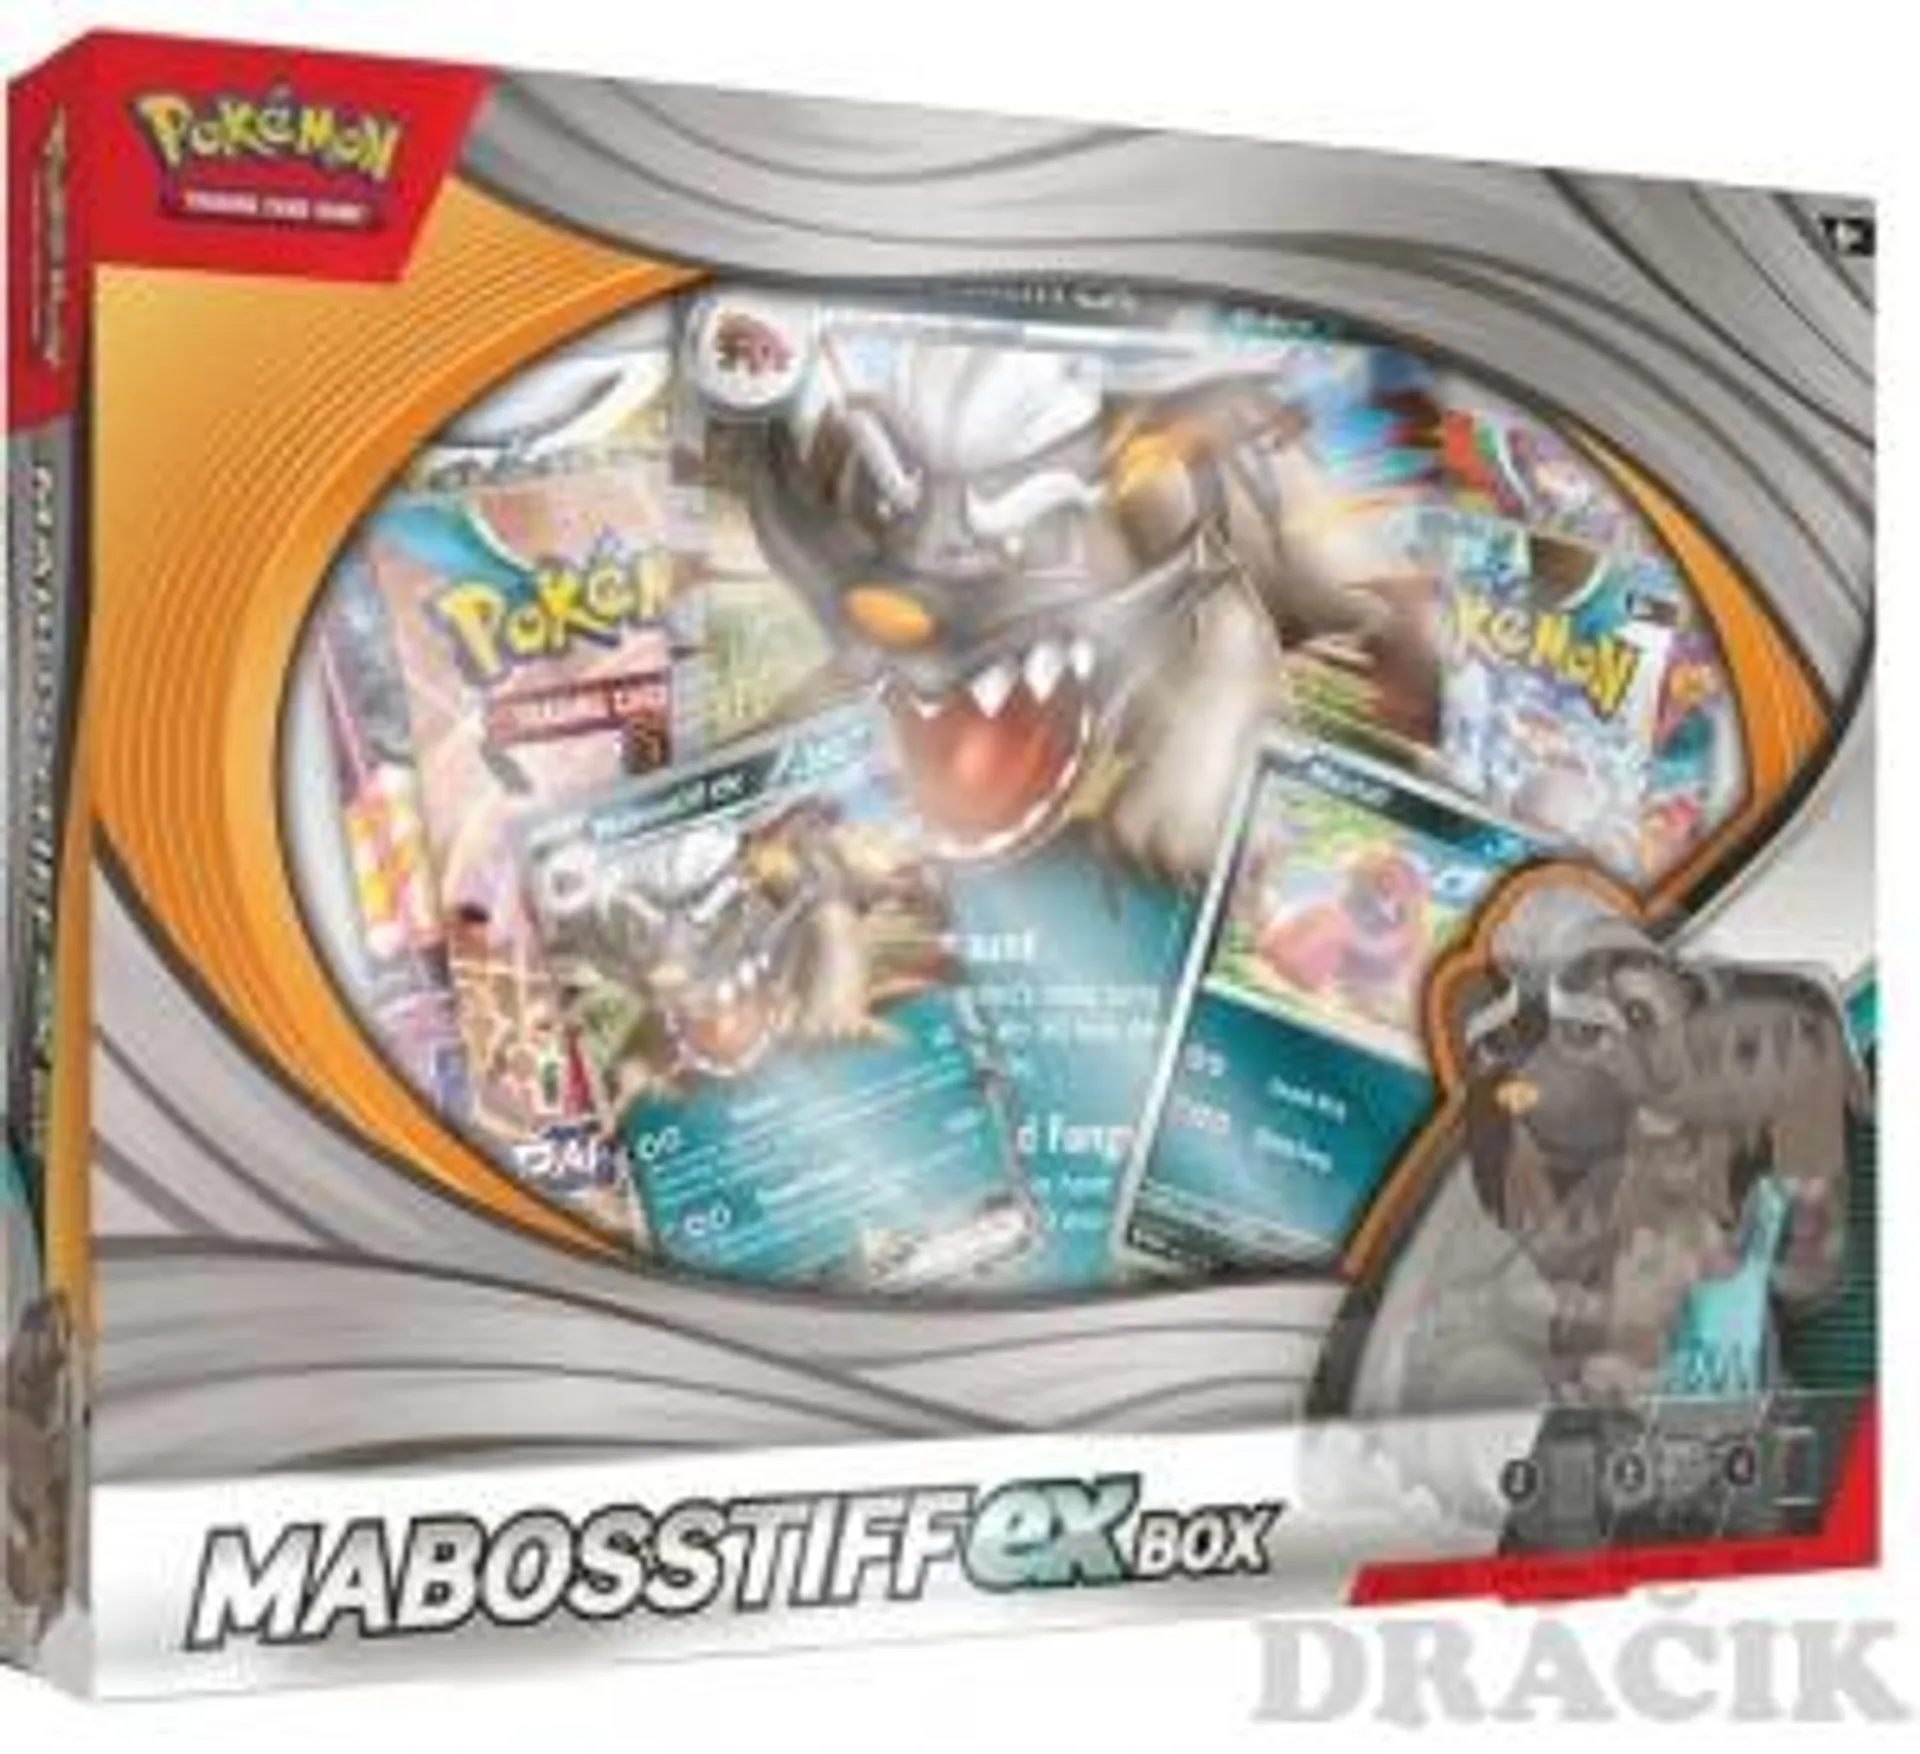 Pokémon TCG: Mabosstiff ex Box